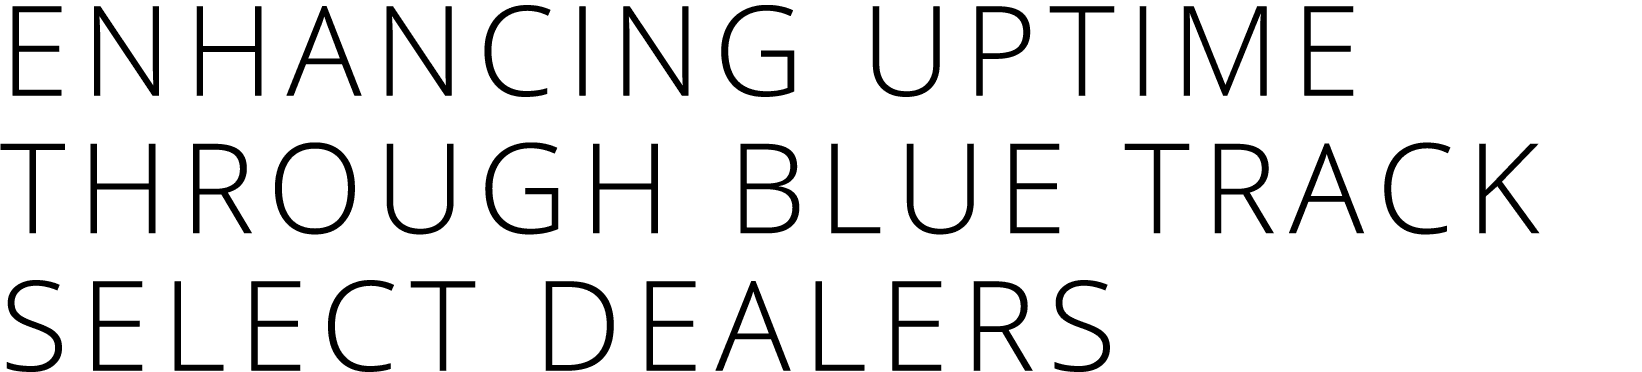 Enhancing uptime through Blue Track Select dealers 